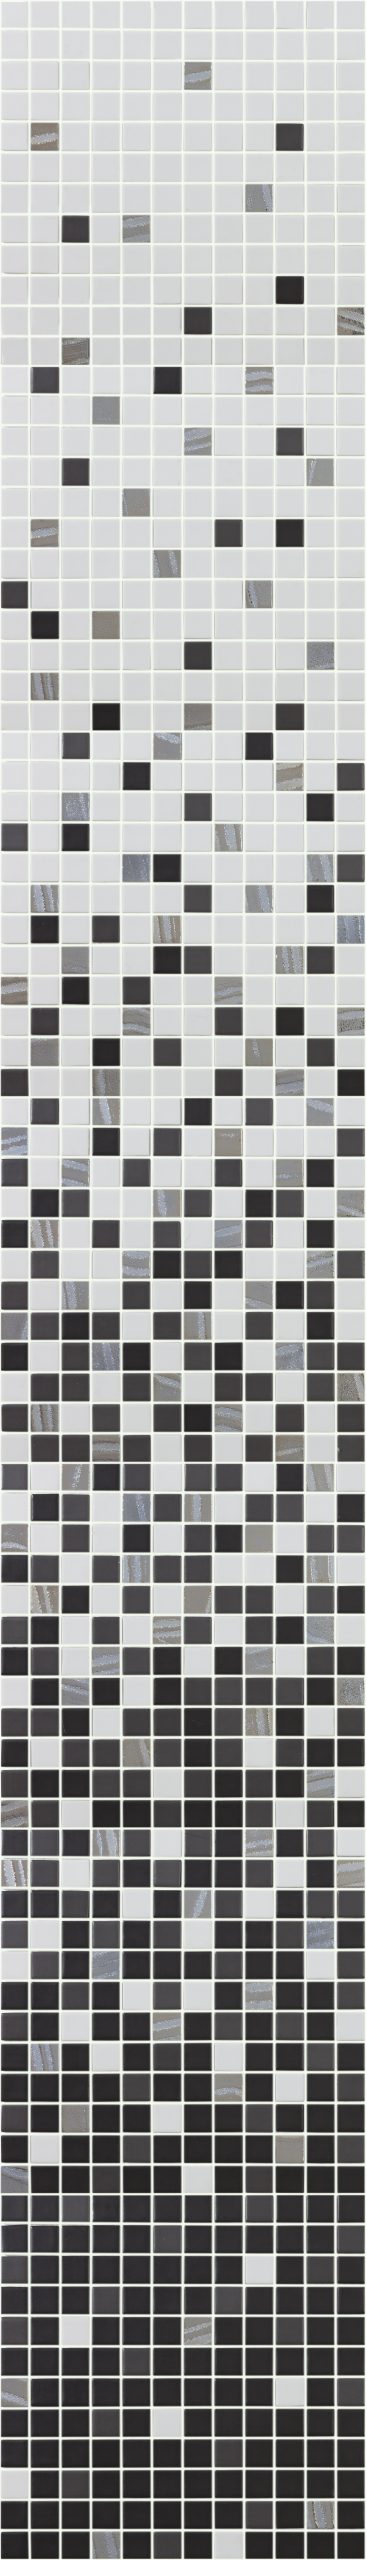 Degradados Vidrepur mosaico gresite 25x25mm glass mosaic pool interior design